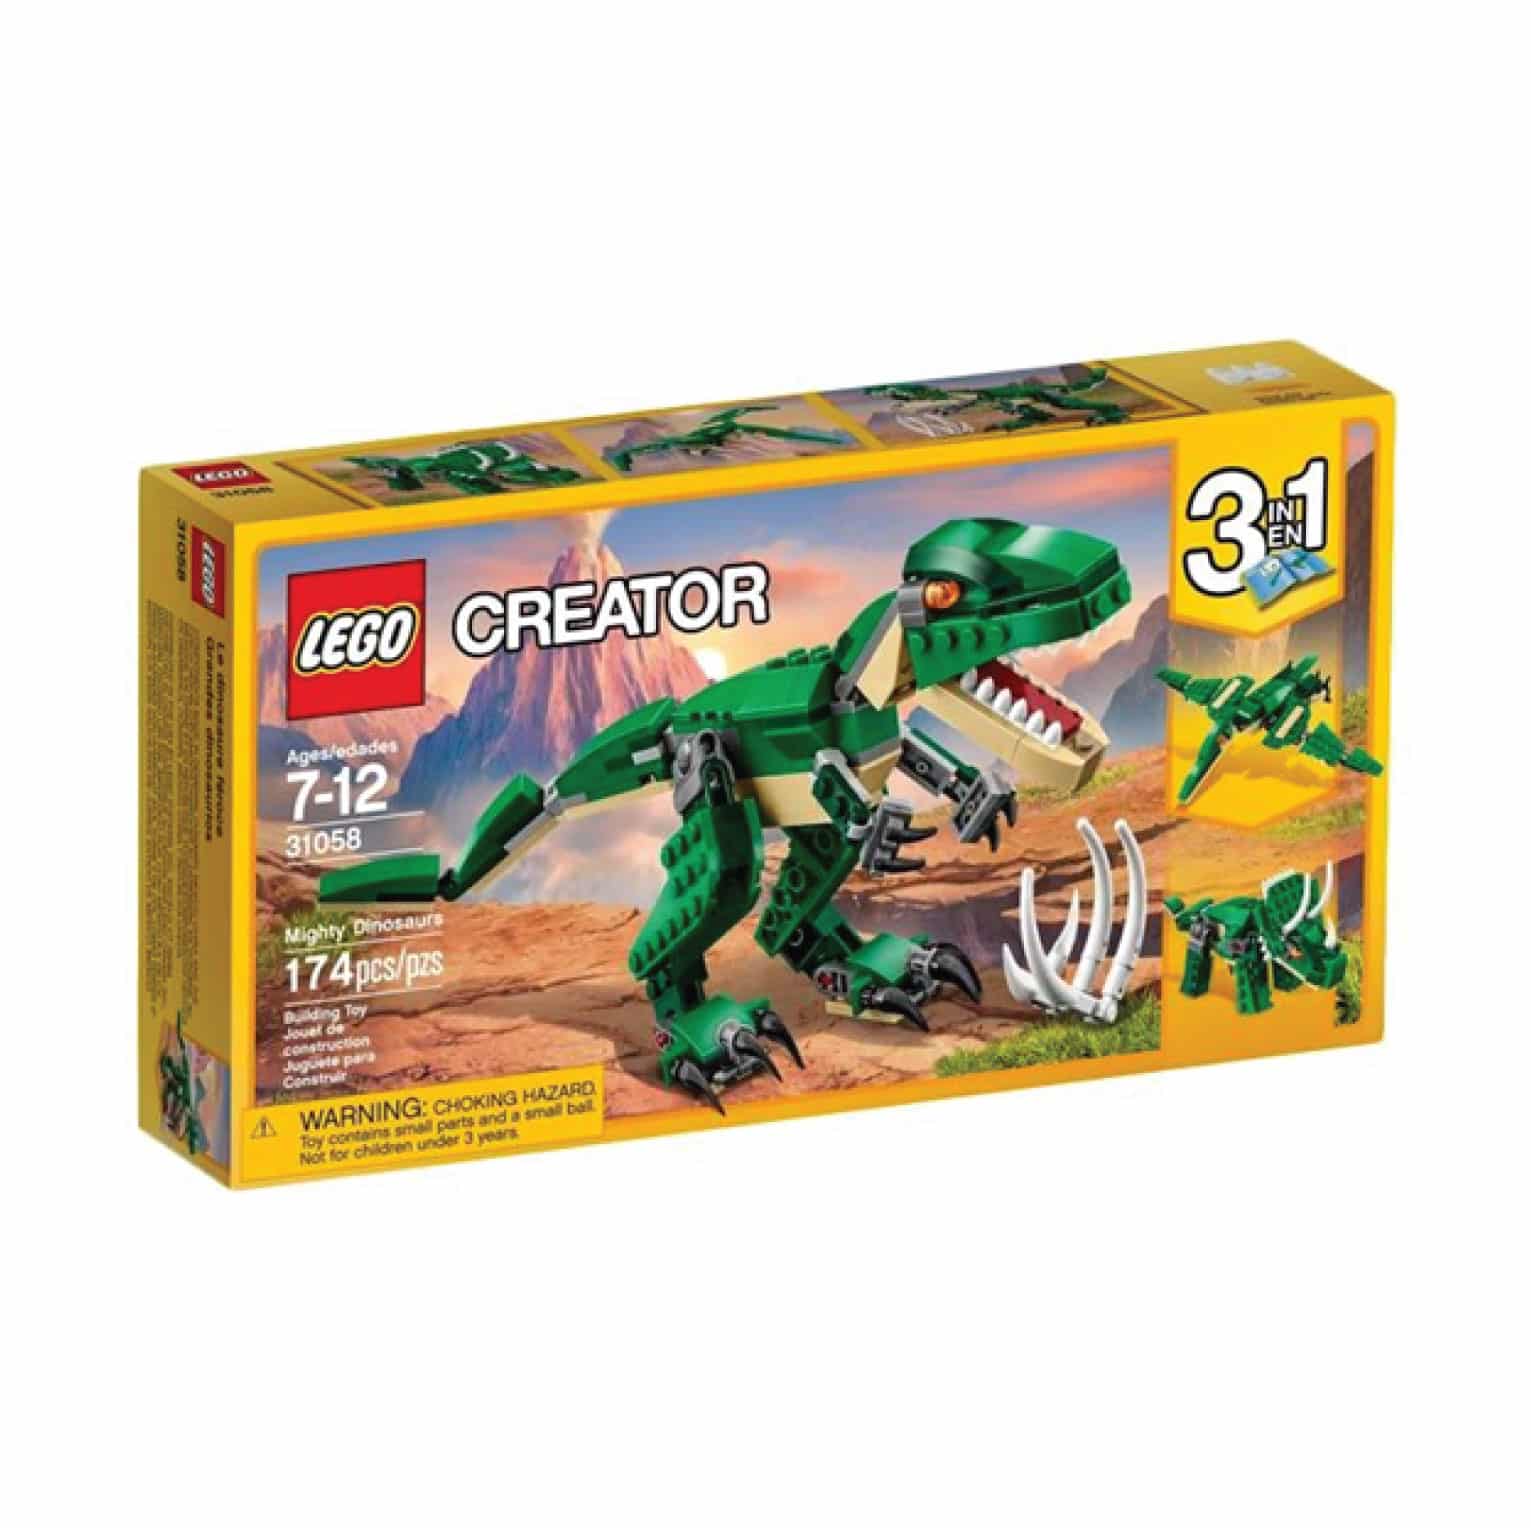 Lego Creator 31058 Mighty Dinosaur Blocks & Stacking Toys